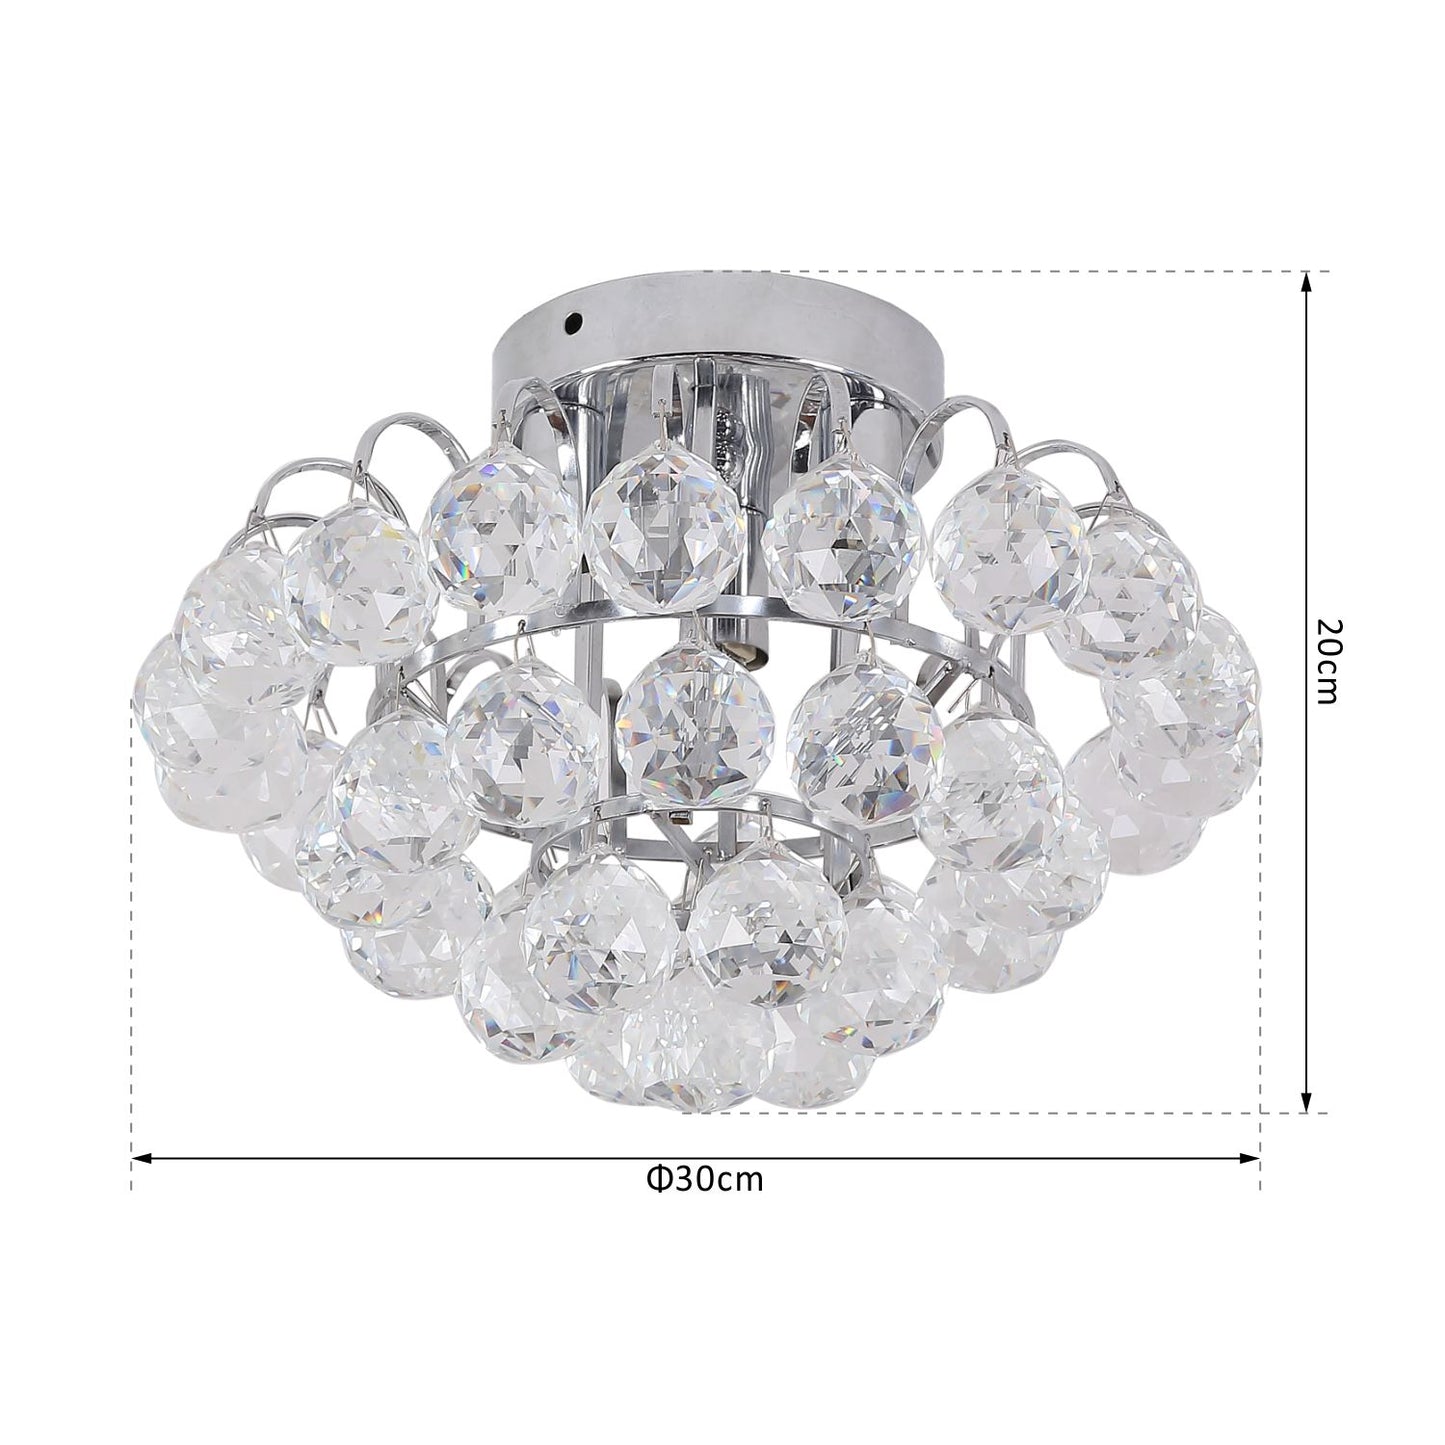 HOMCOM 30x30cm K9 Crystal Droplets Ceiling Pendant Light Silver